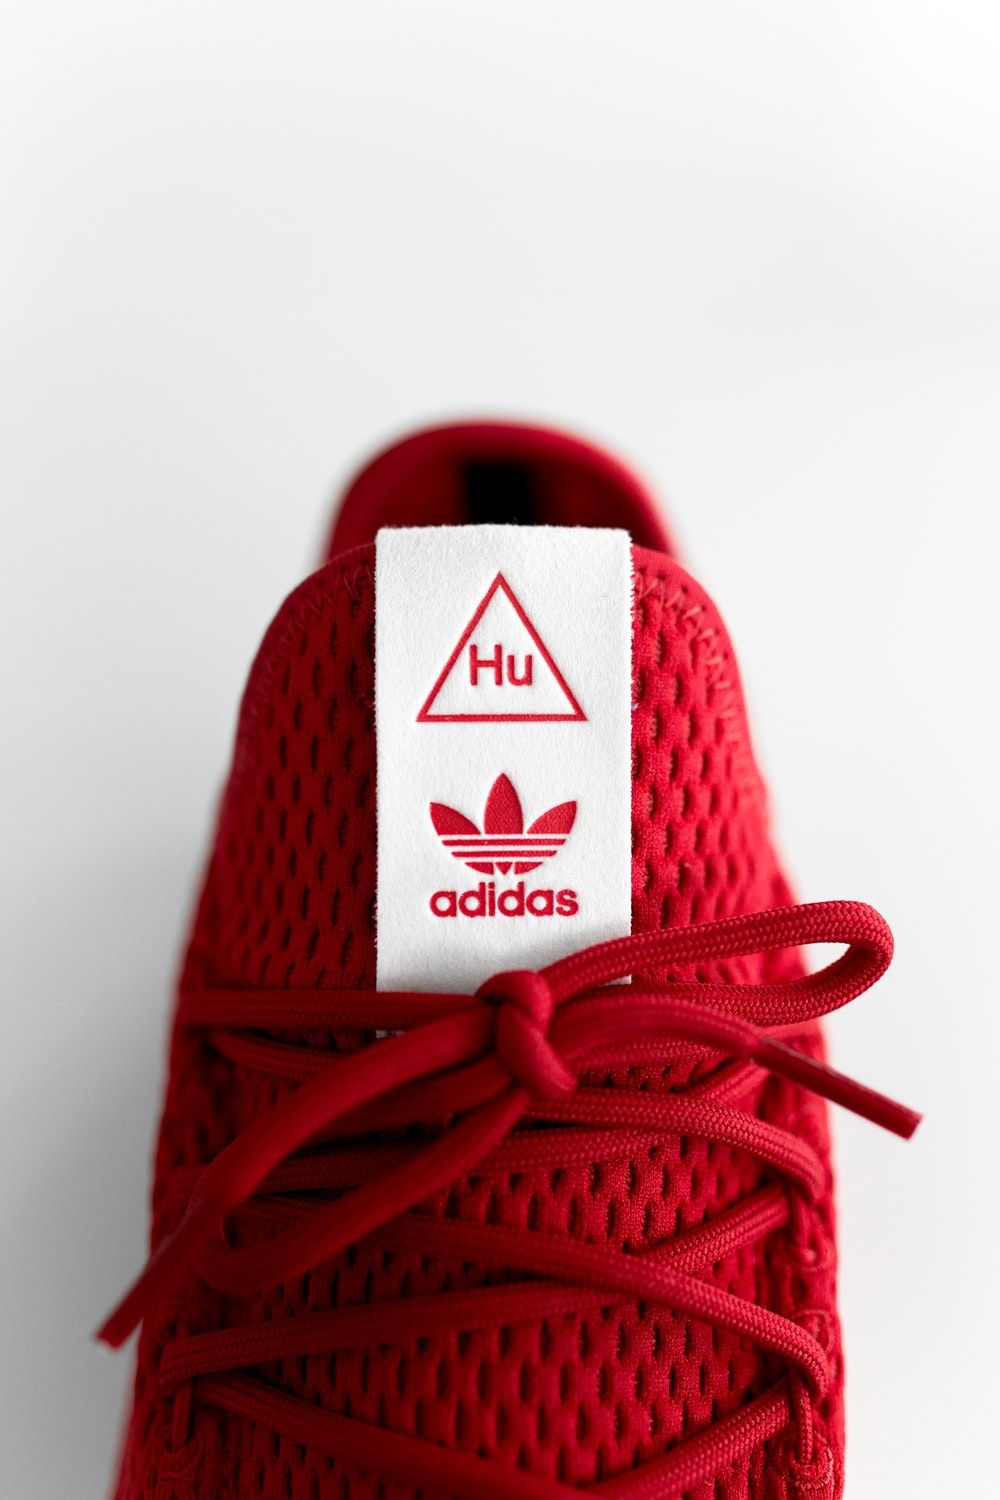 Adidas Wallpaper: Free HD Download [HQ]